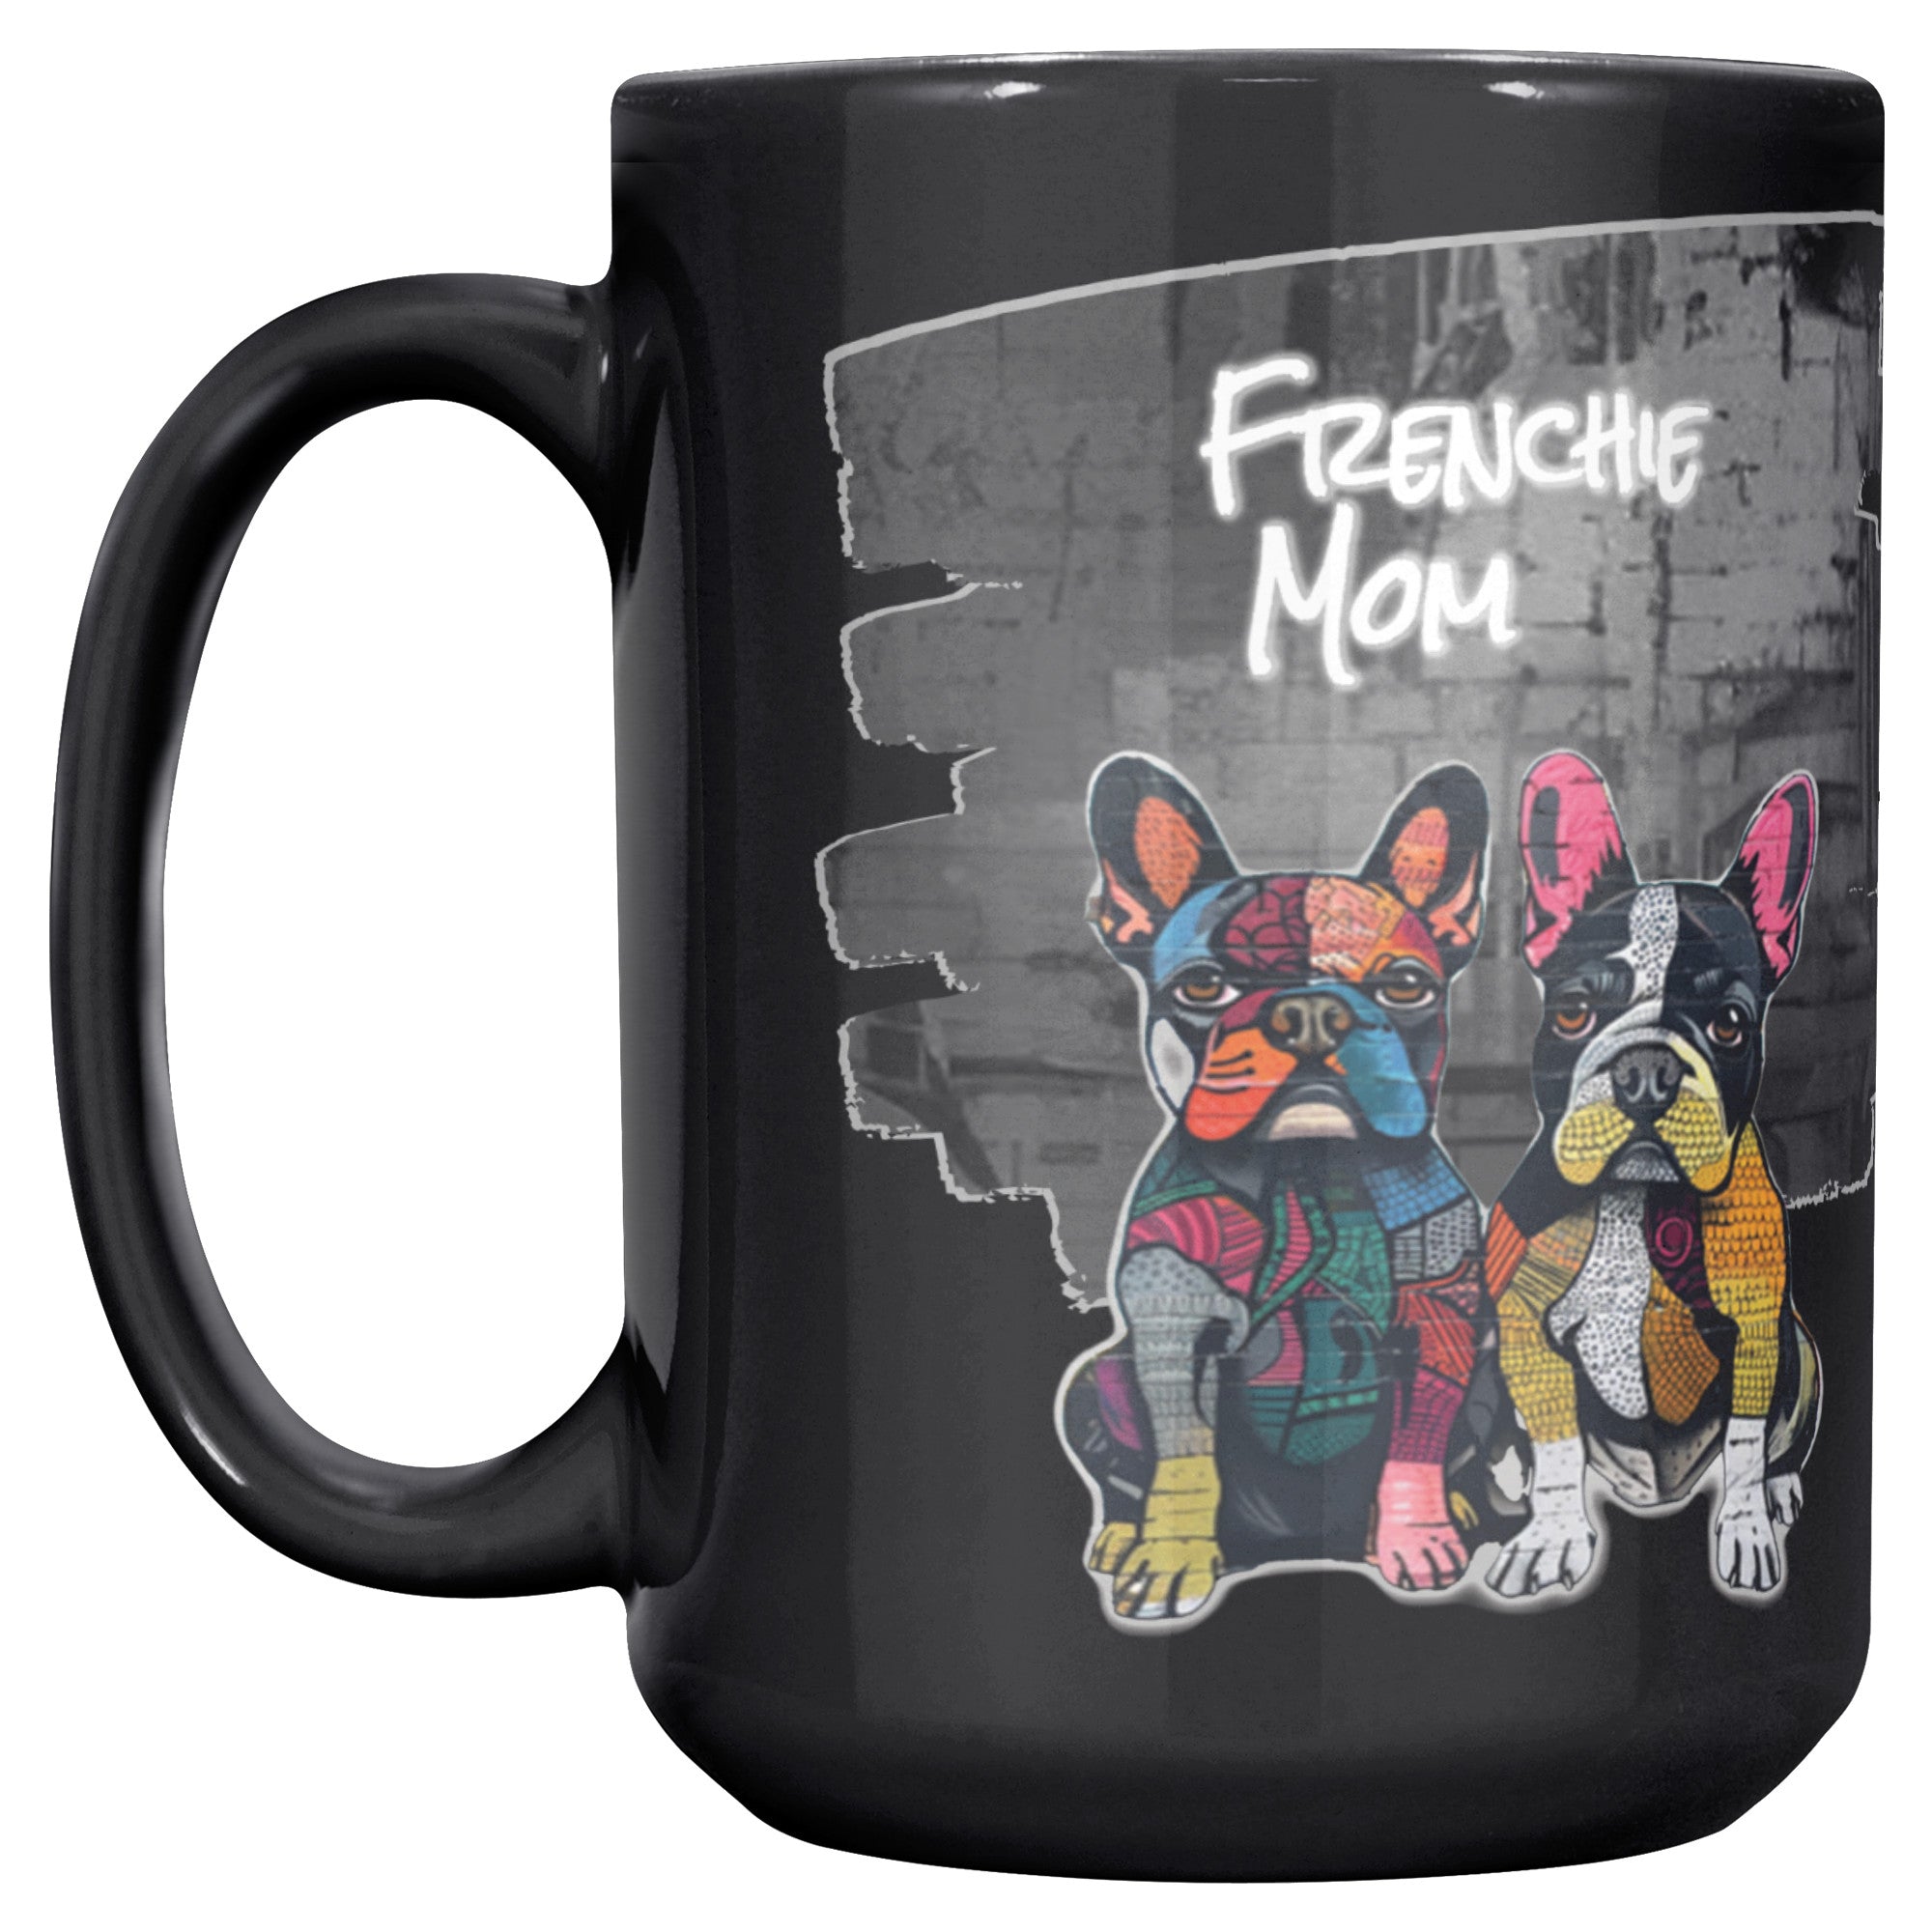 Original Frenchie Mom Graffiti Dog Art Edgy Black Mug - original-frenchie-street-art-graffiti-black-mug